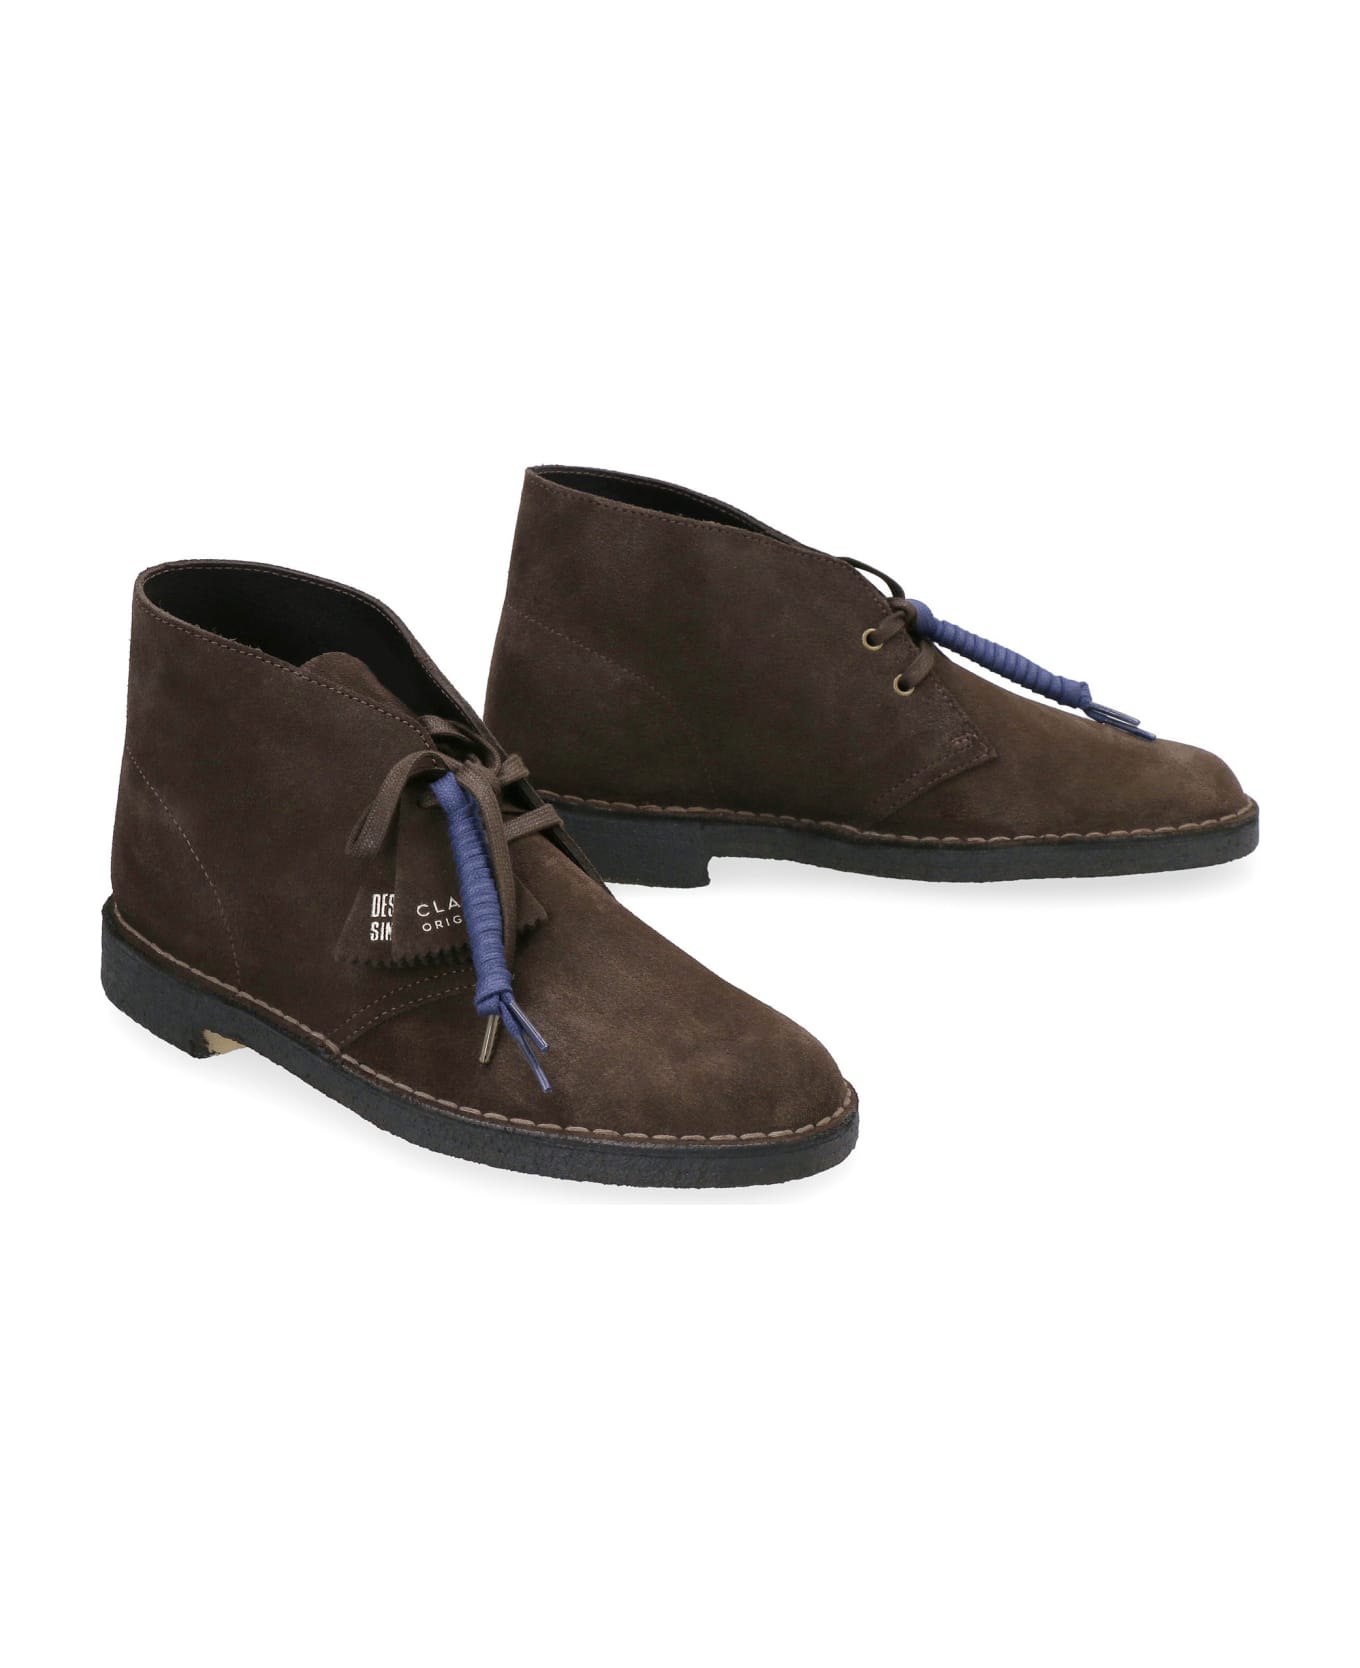 Clarks Suede Desert Boots - brown